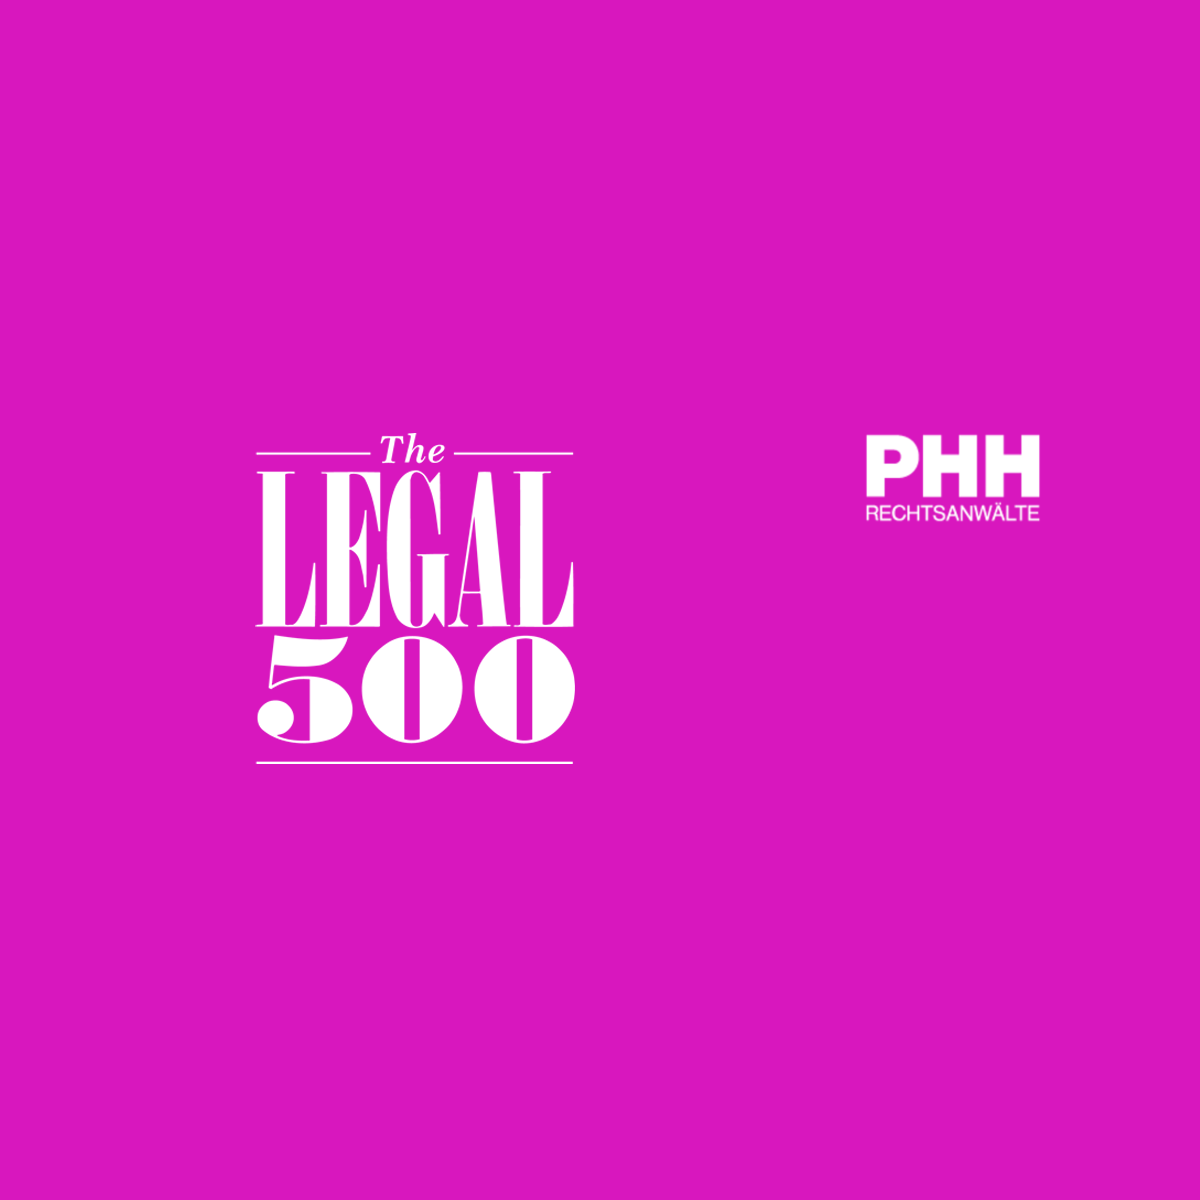 Legal500 Ranking 2022